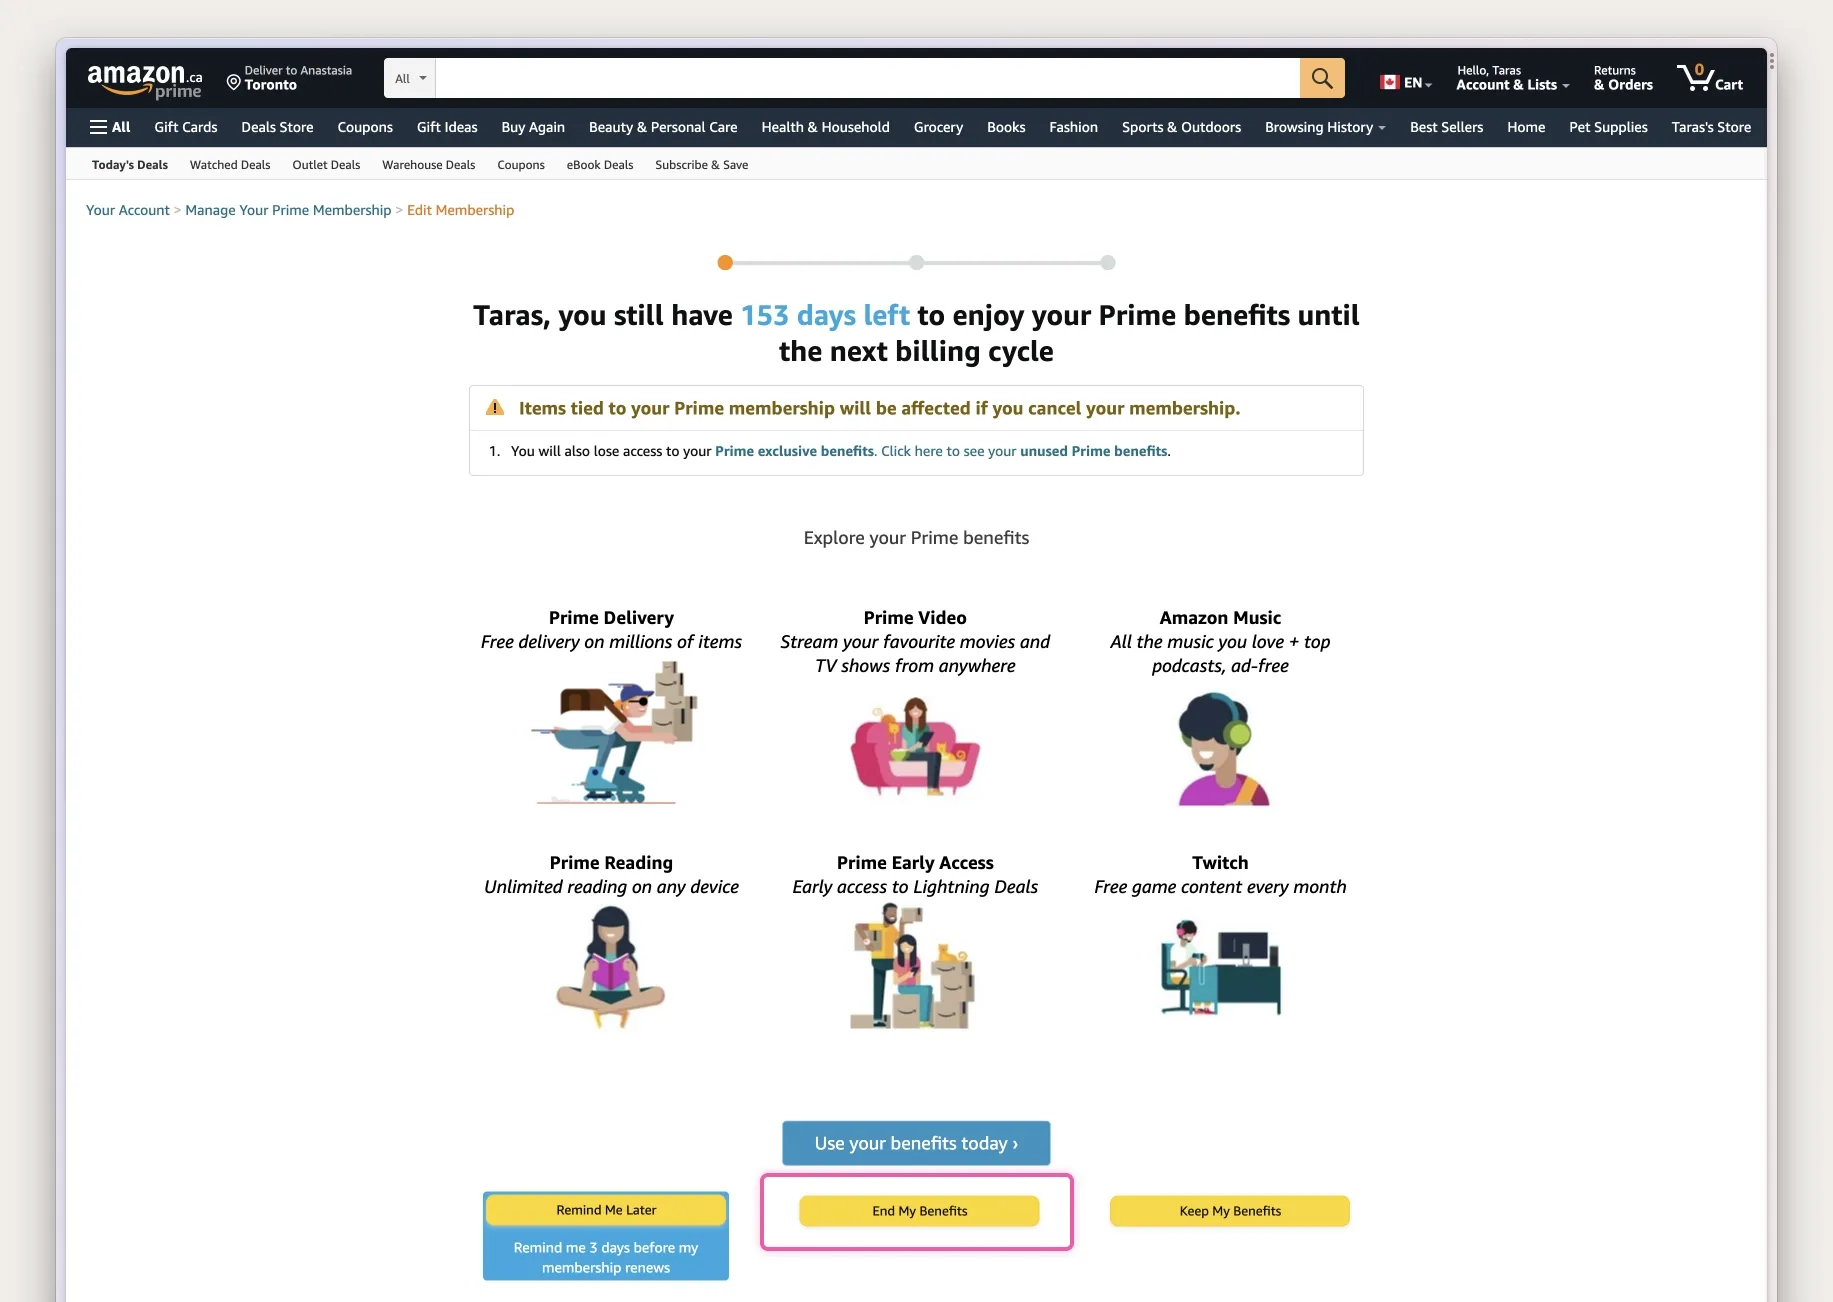 Amazon Prime benefits page